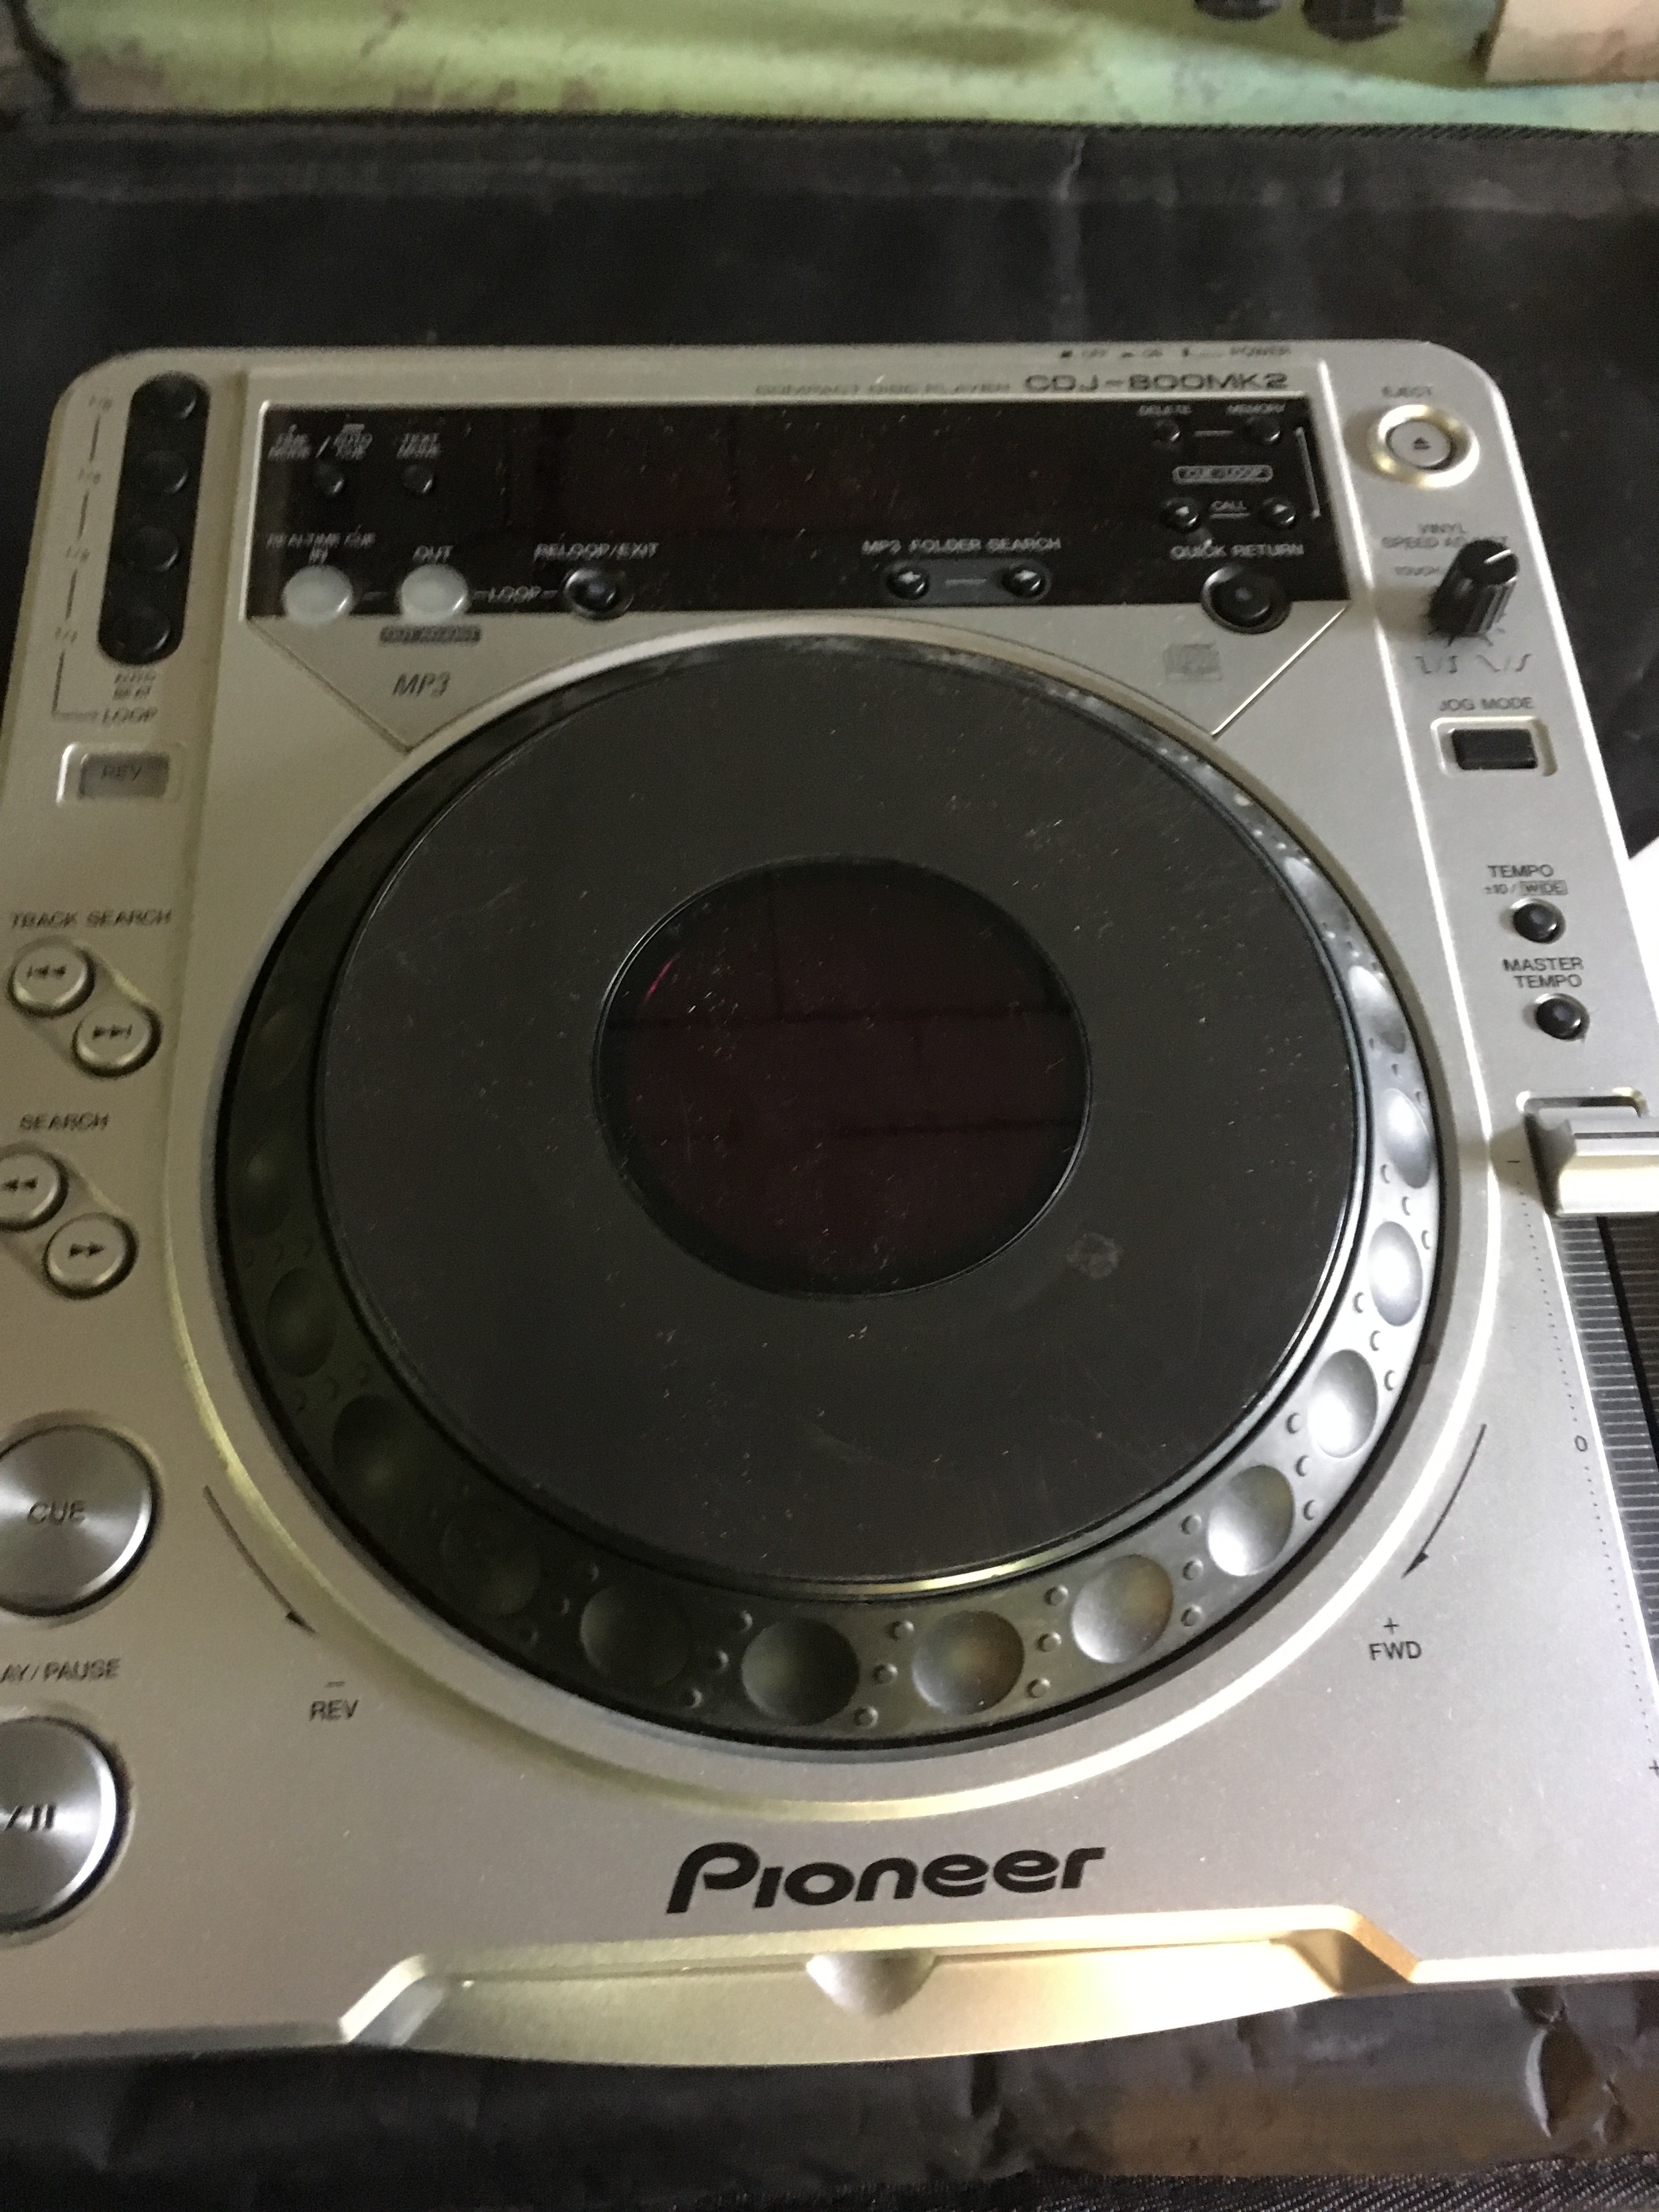 Pioneer CDJ-800 MK2 image (#1910854) - Audiofanzine